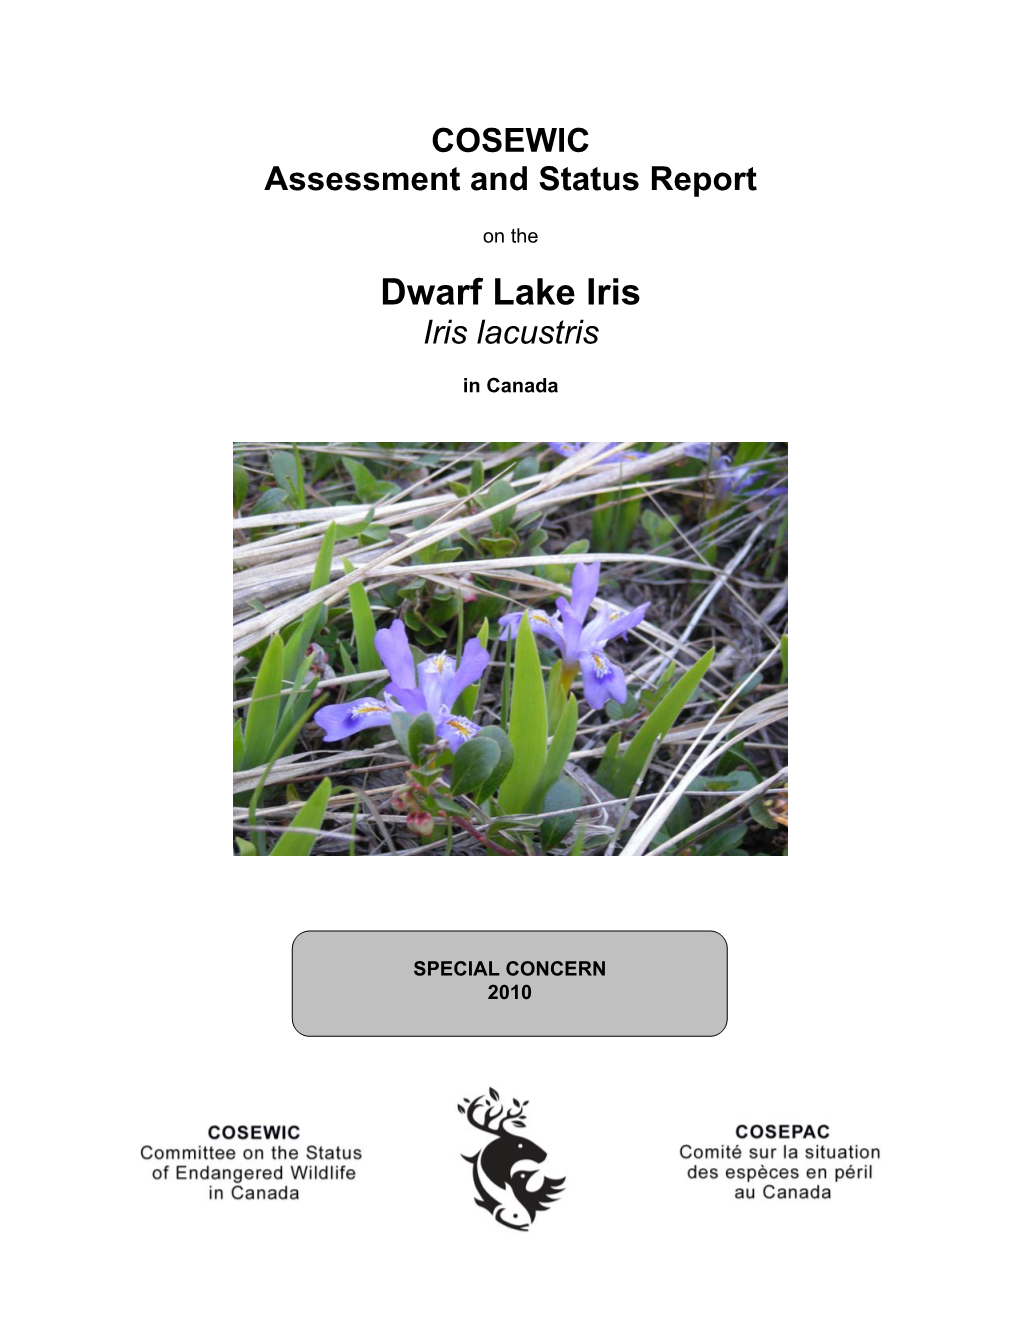 Cosewic Assessment and Status Report on the Dwarf Lake Iris (Iris Lacustris) in Canada, 2010